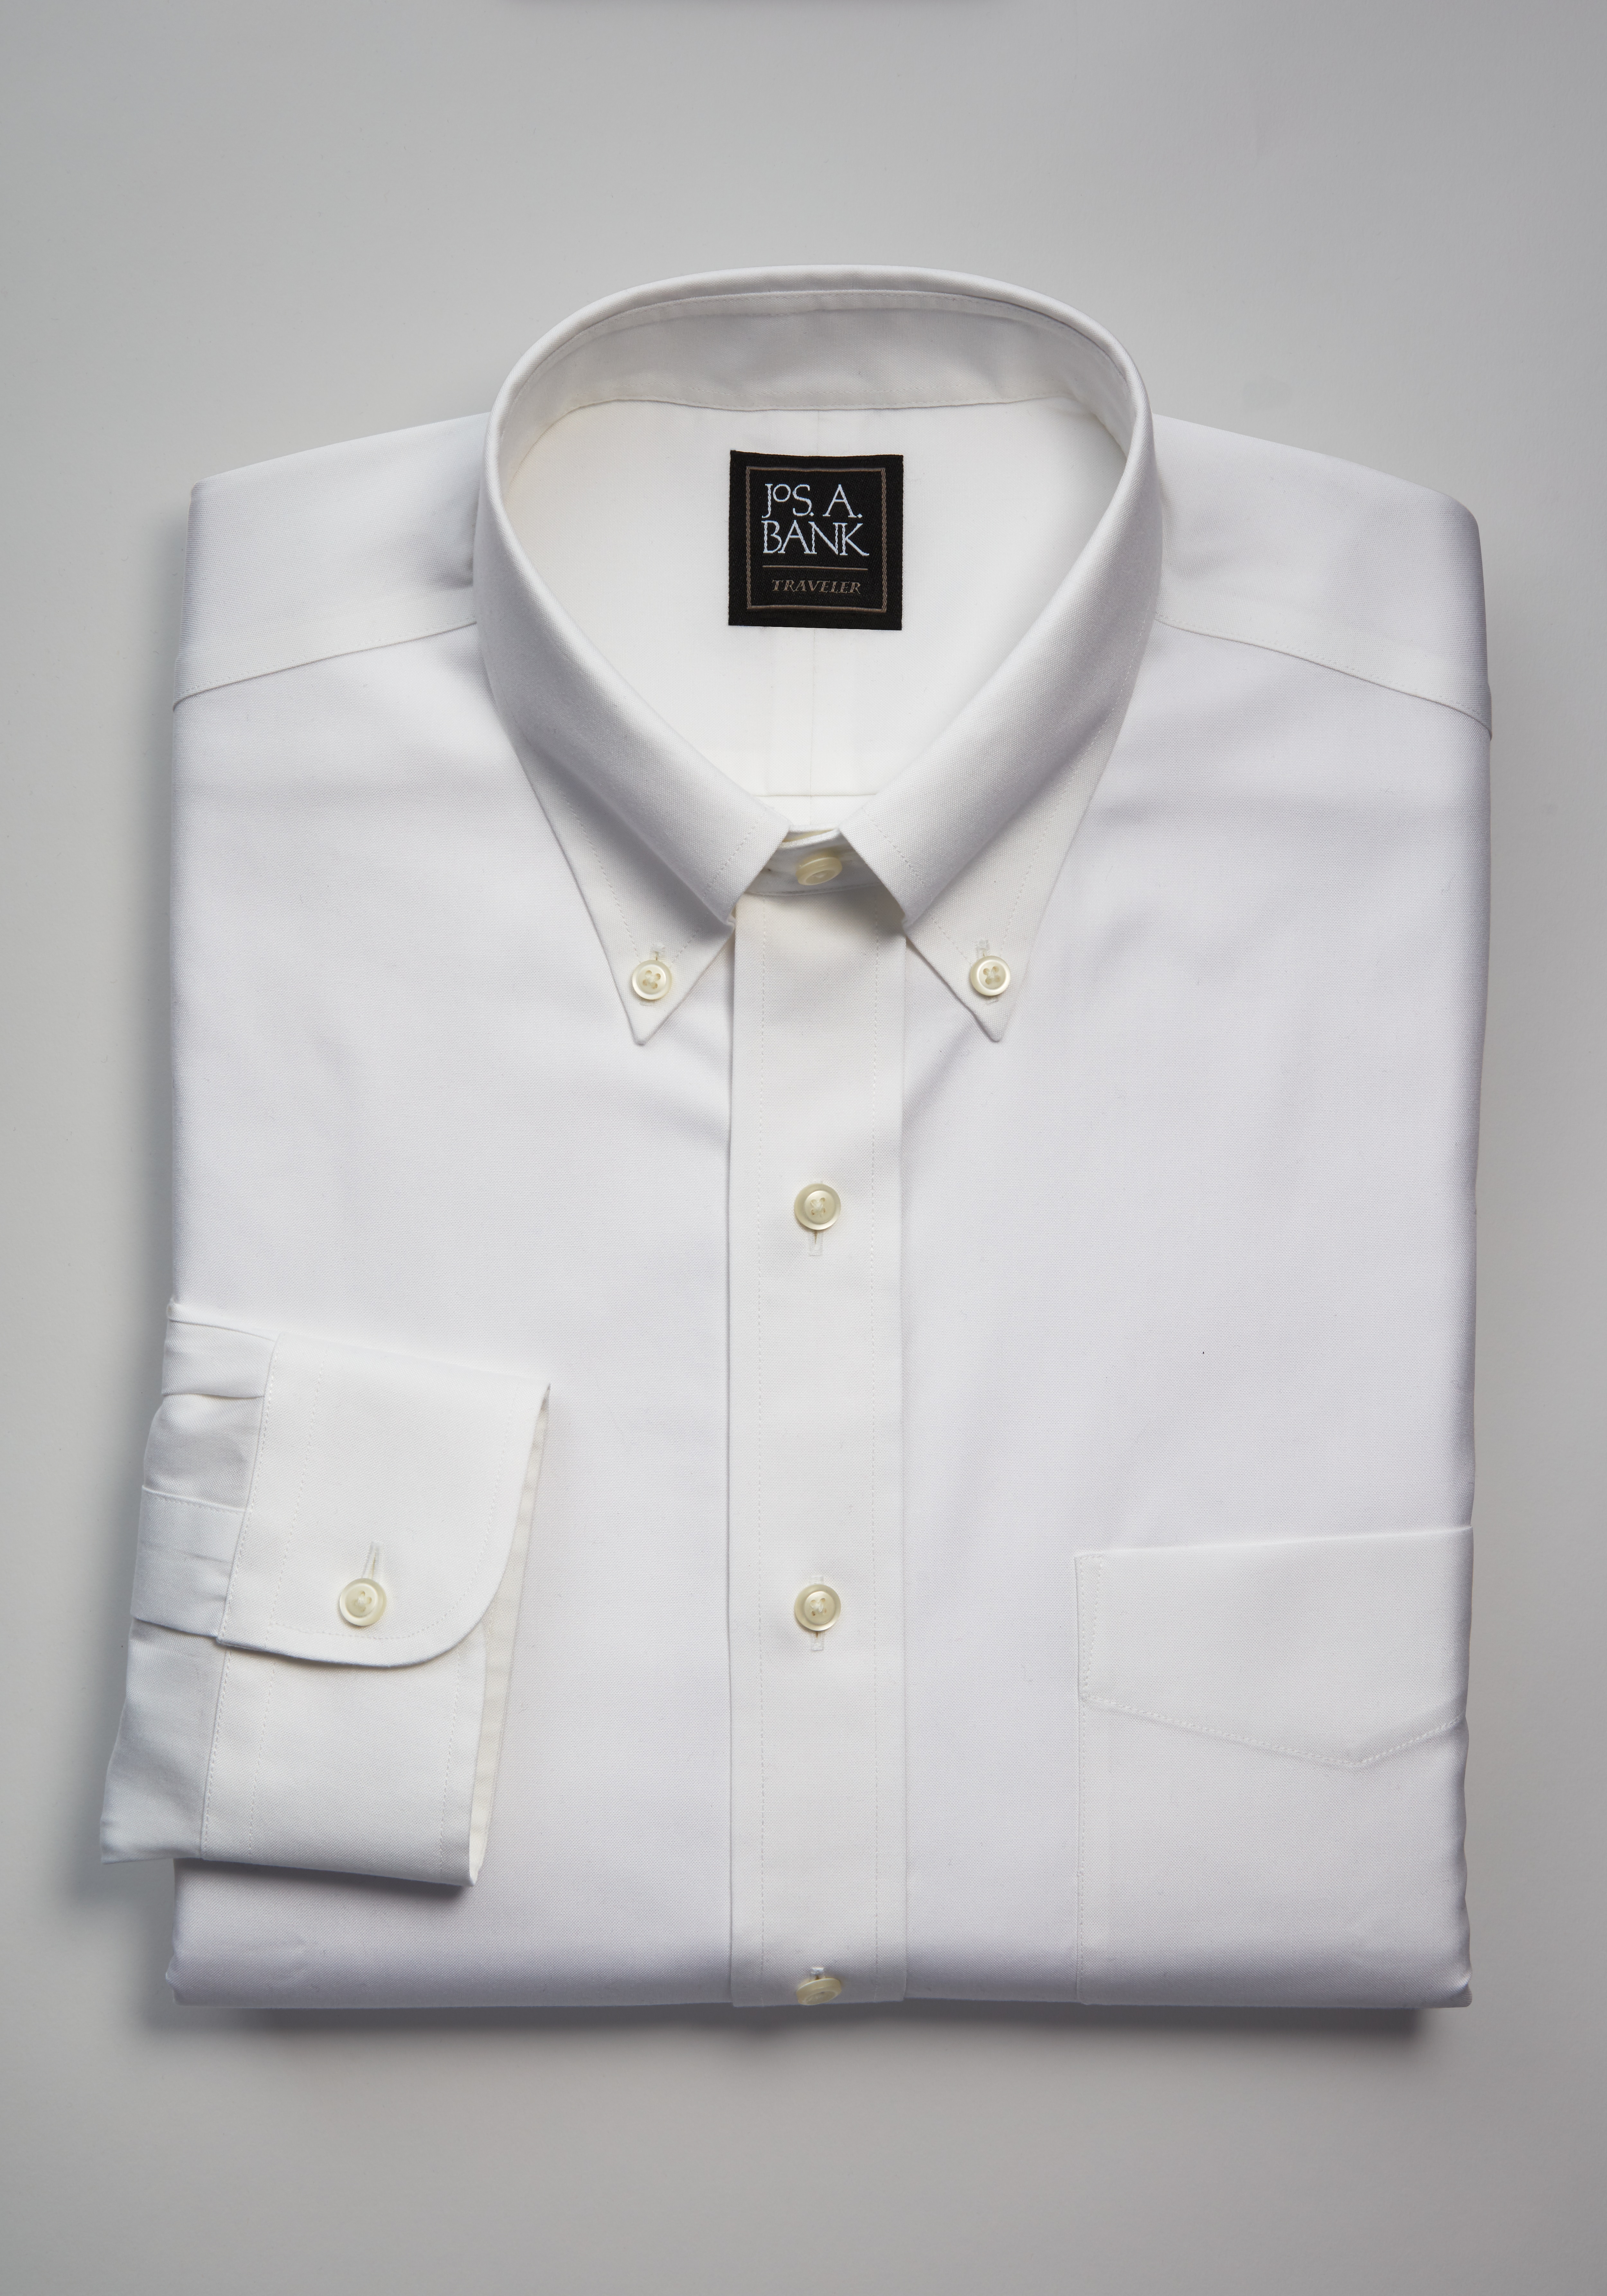 Men's Premium Formal Cotton Shirt Best Seller Every Day Wear (Pack